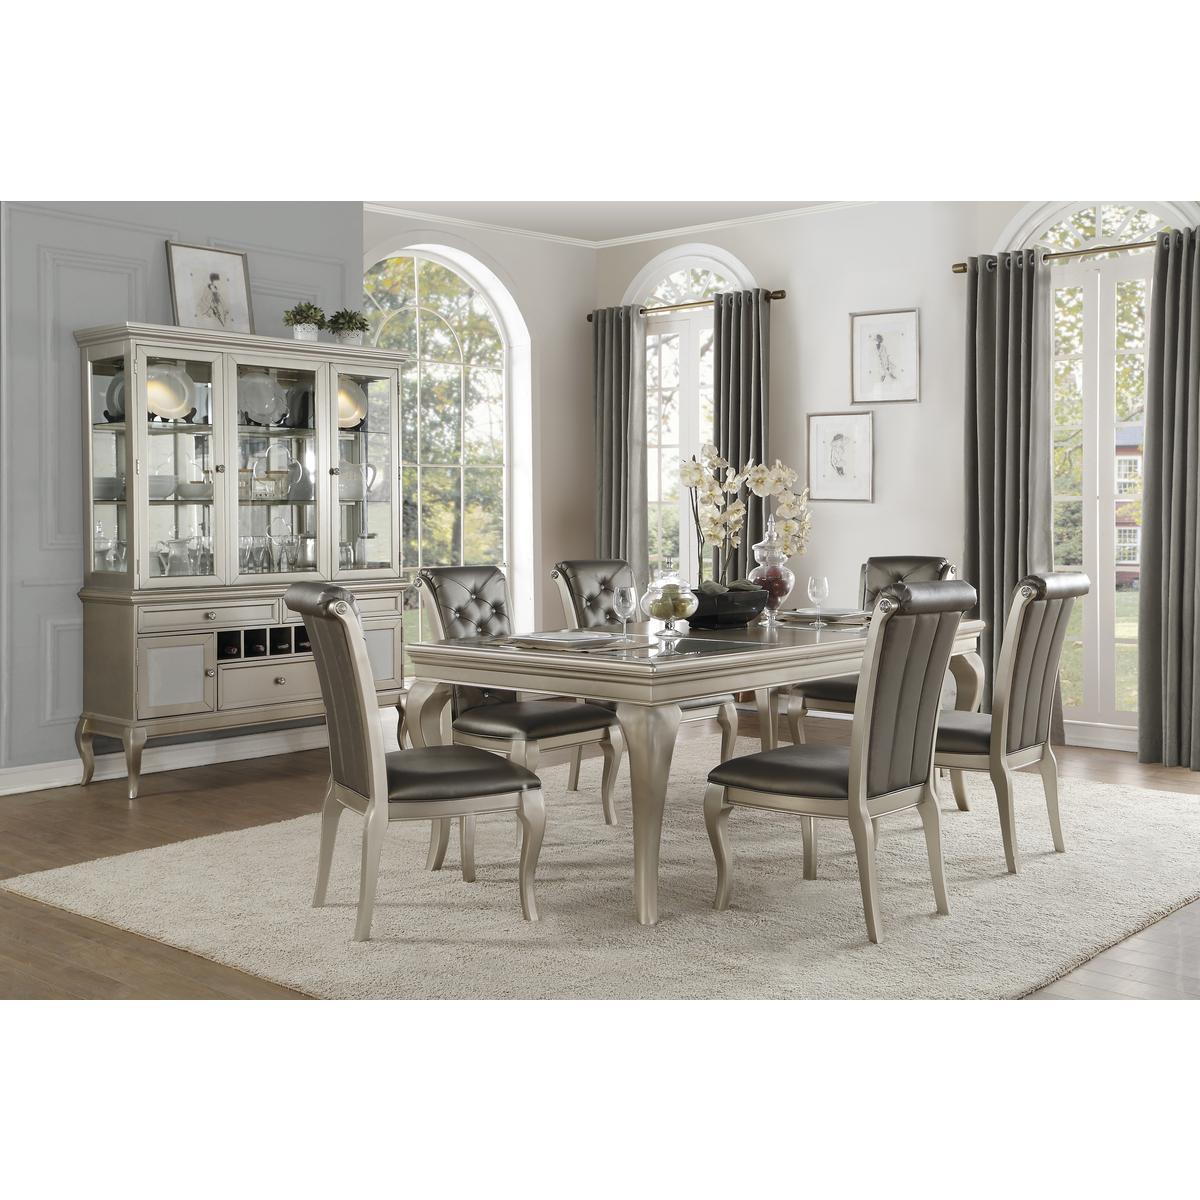 Crawford Rectangular Dining Room Set in Silver by Homelegance Homelegance Furniture